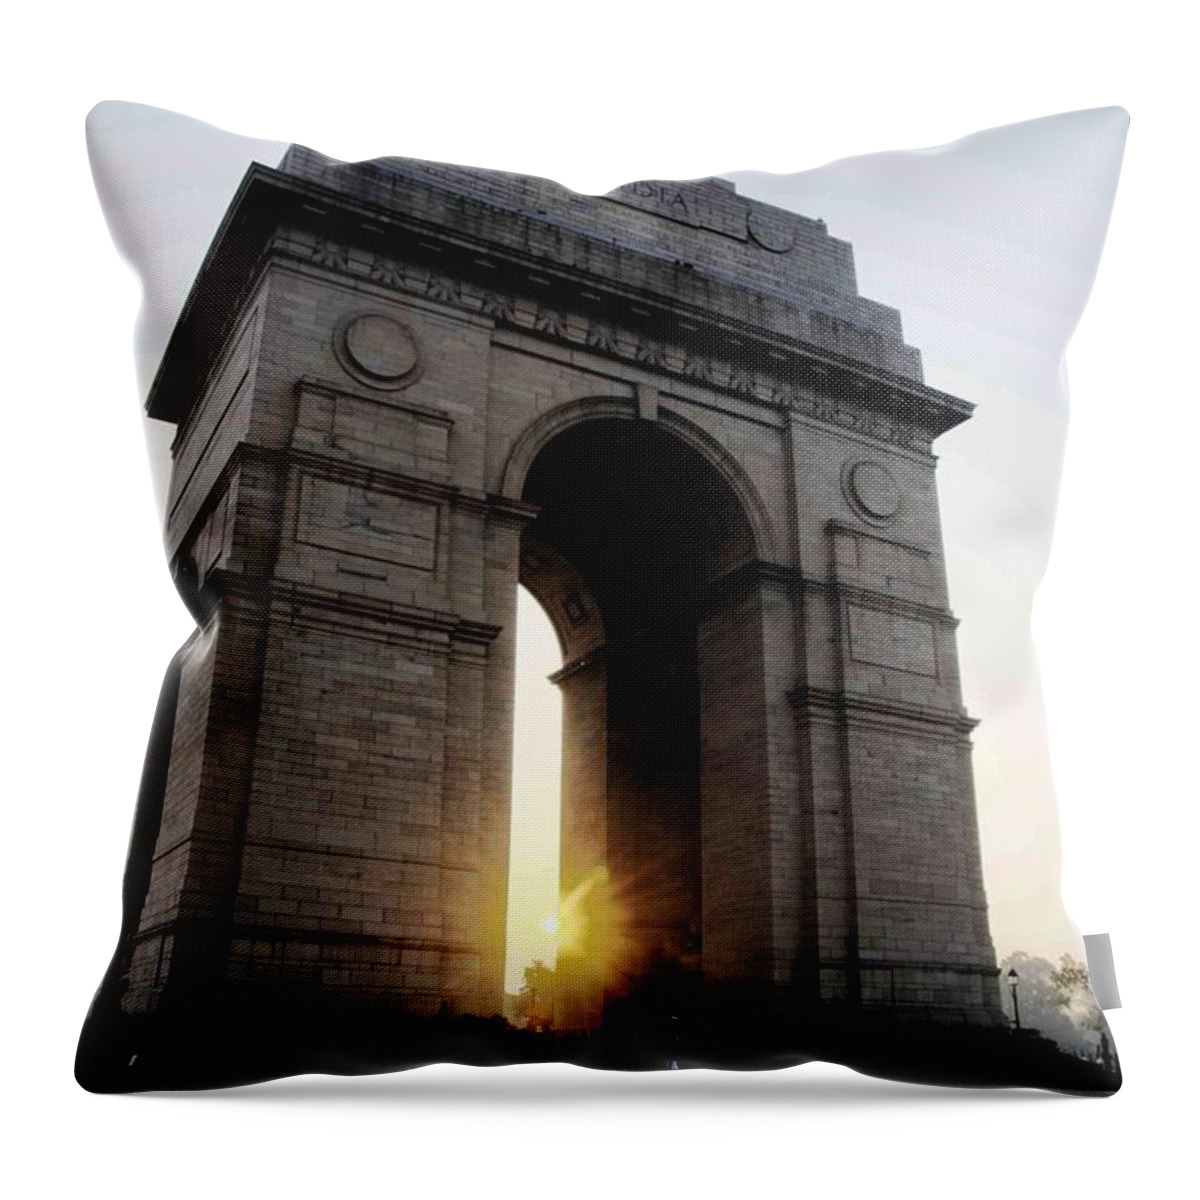 Tranquility Throw Pillow featuring the photograph Sunrise At India Gate, New Delhi by © Jishnu Changkakoti.